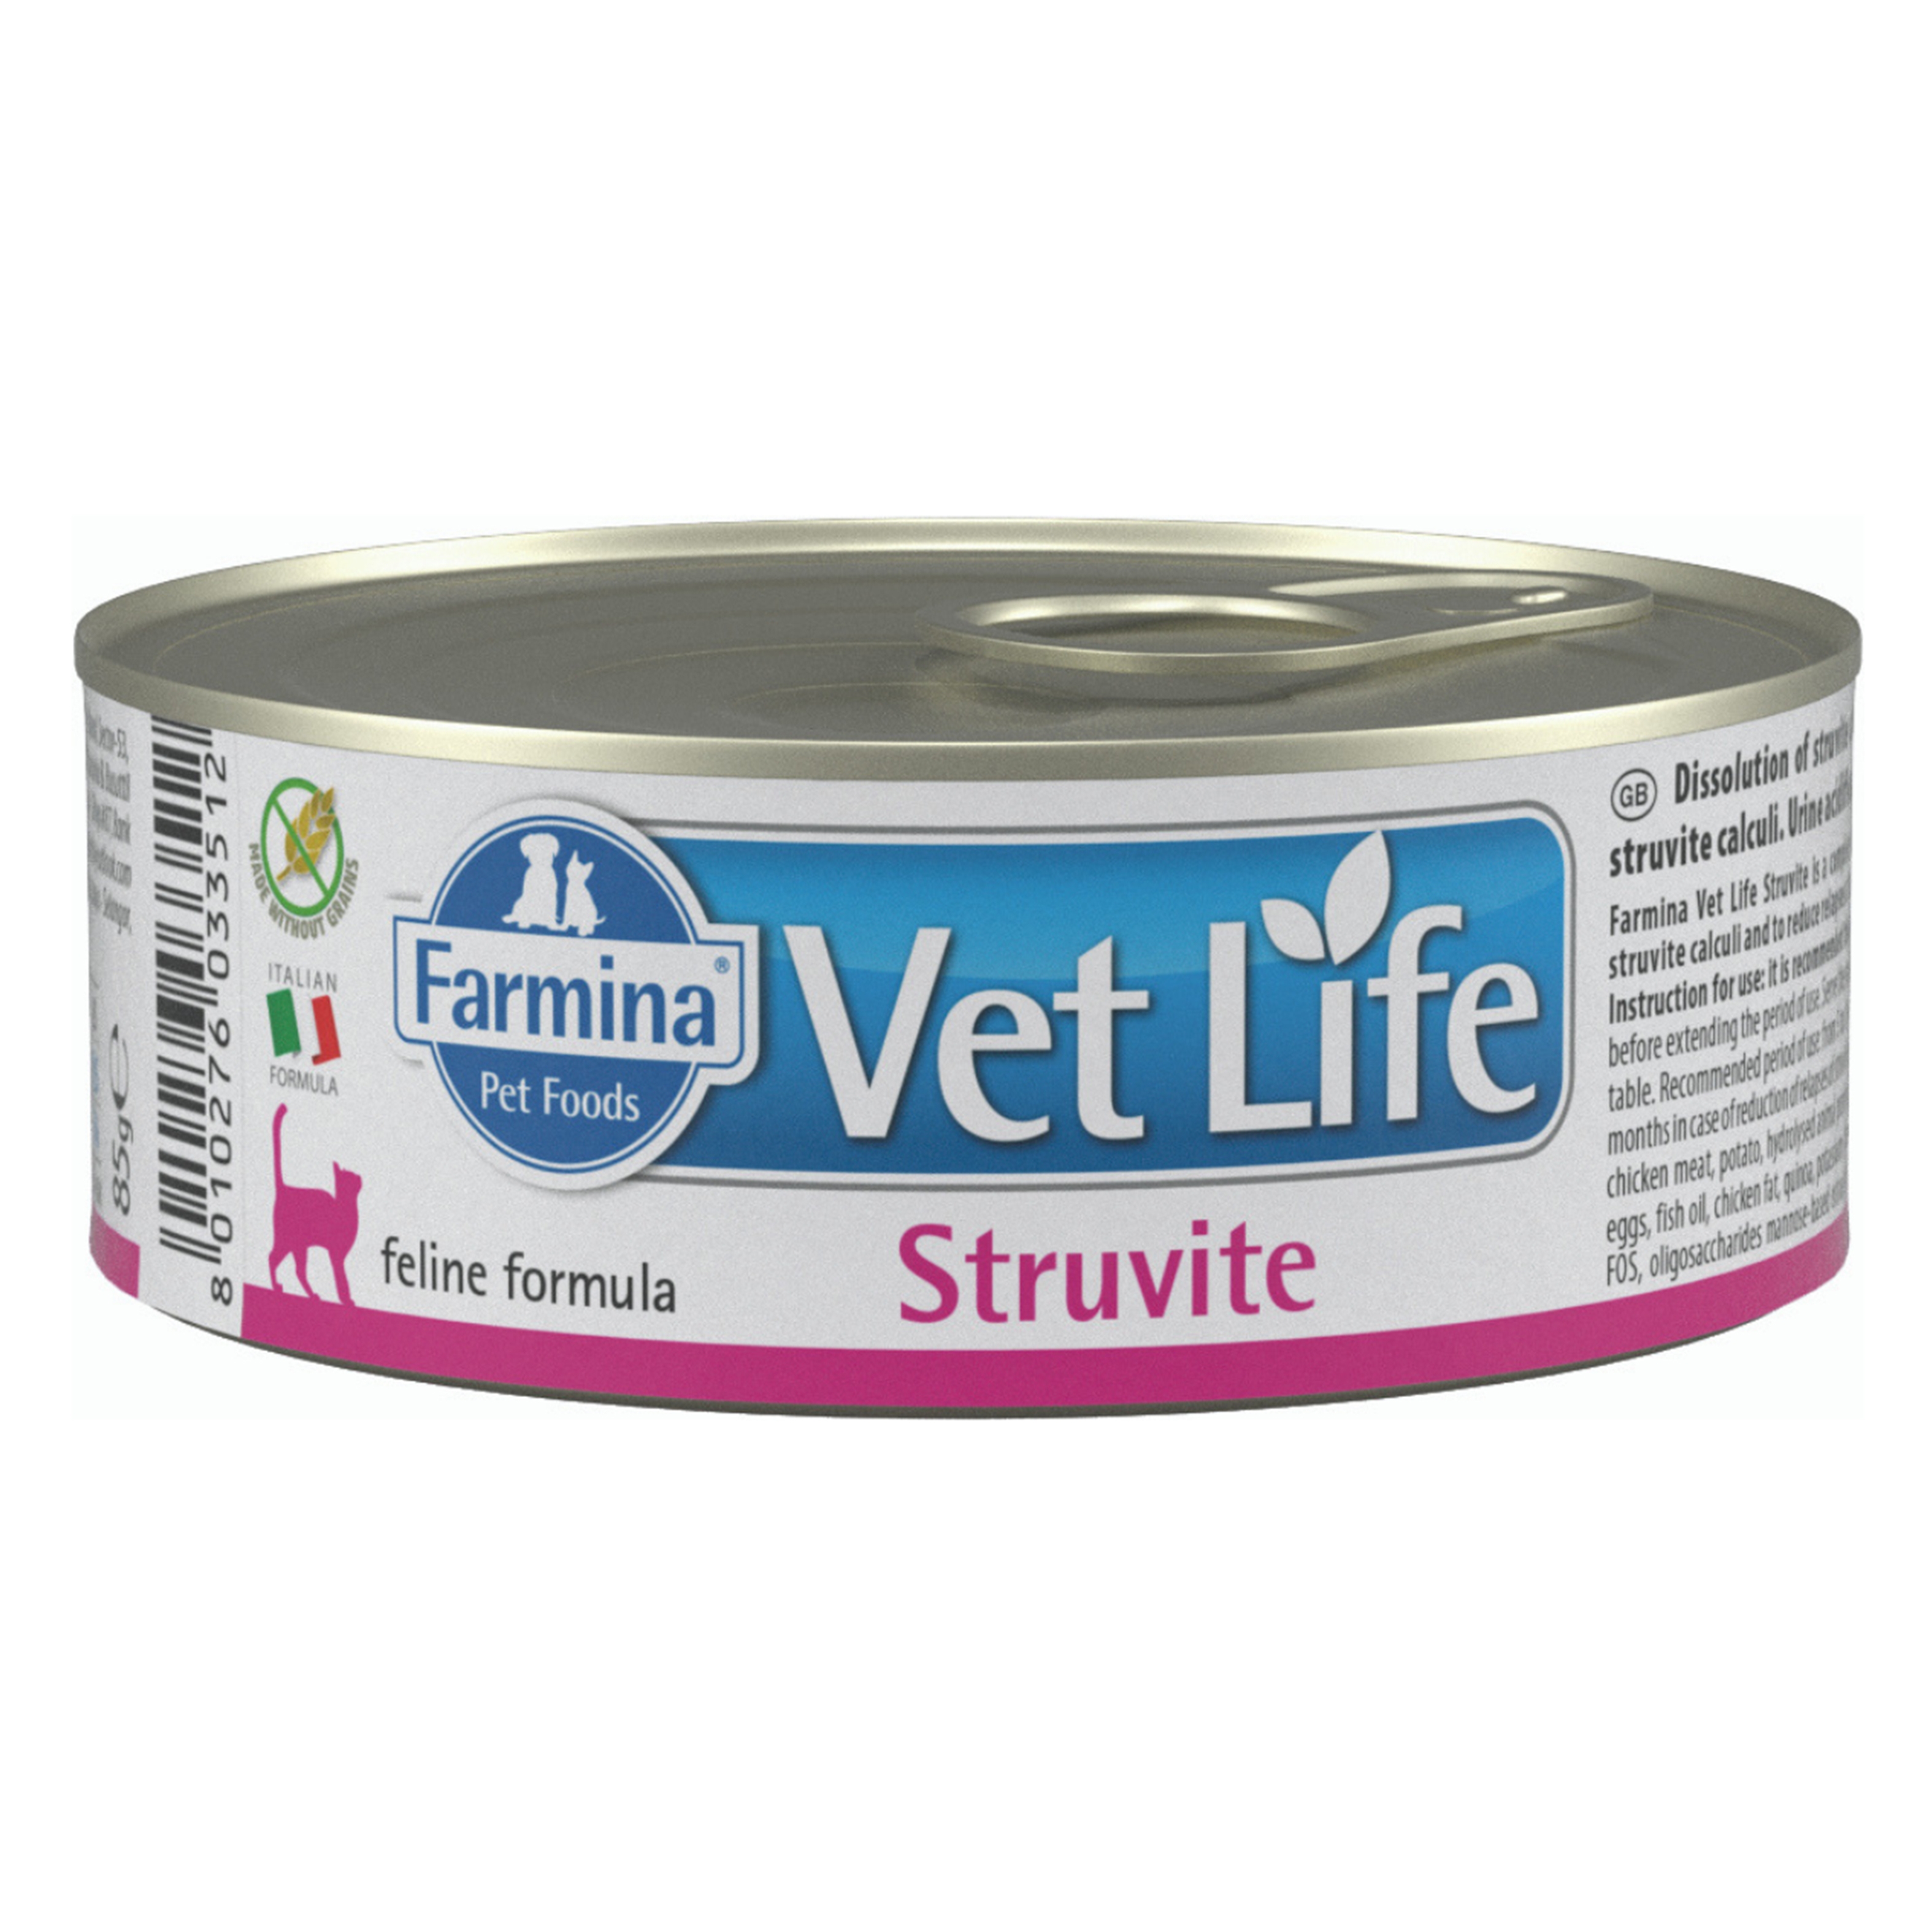 Vet Life Natural Diet Cat Struvite, 85 g Farmina